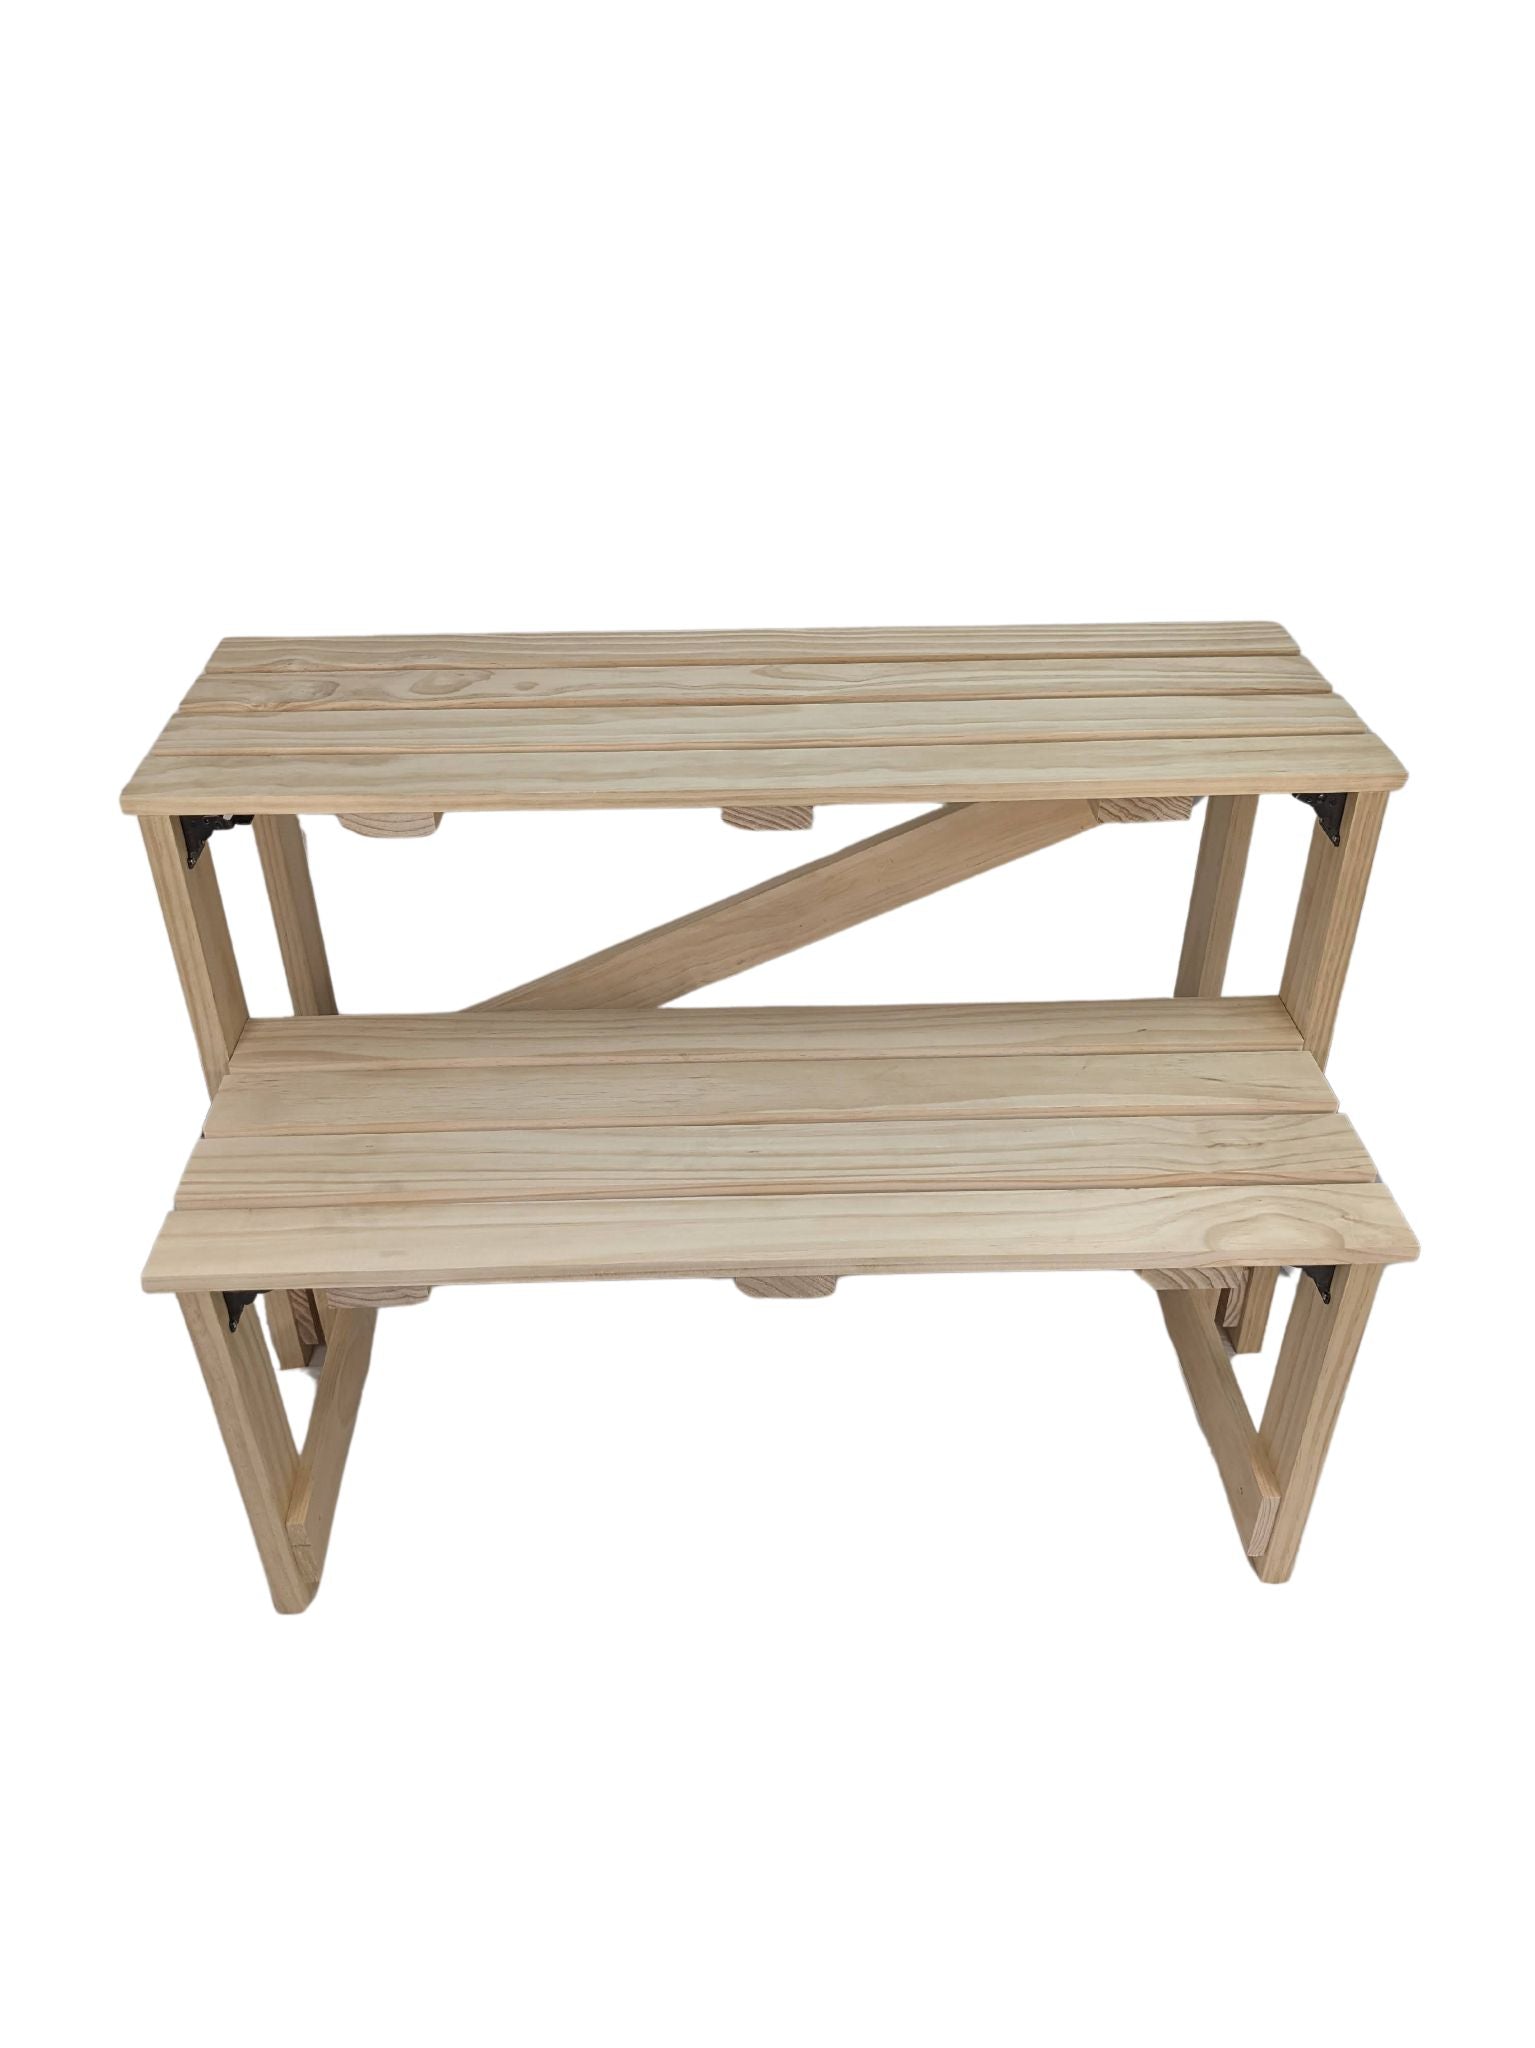 Folding legs on a portable sauna bench